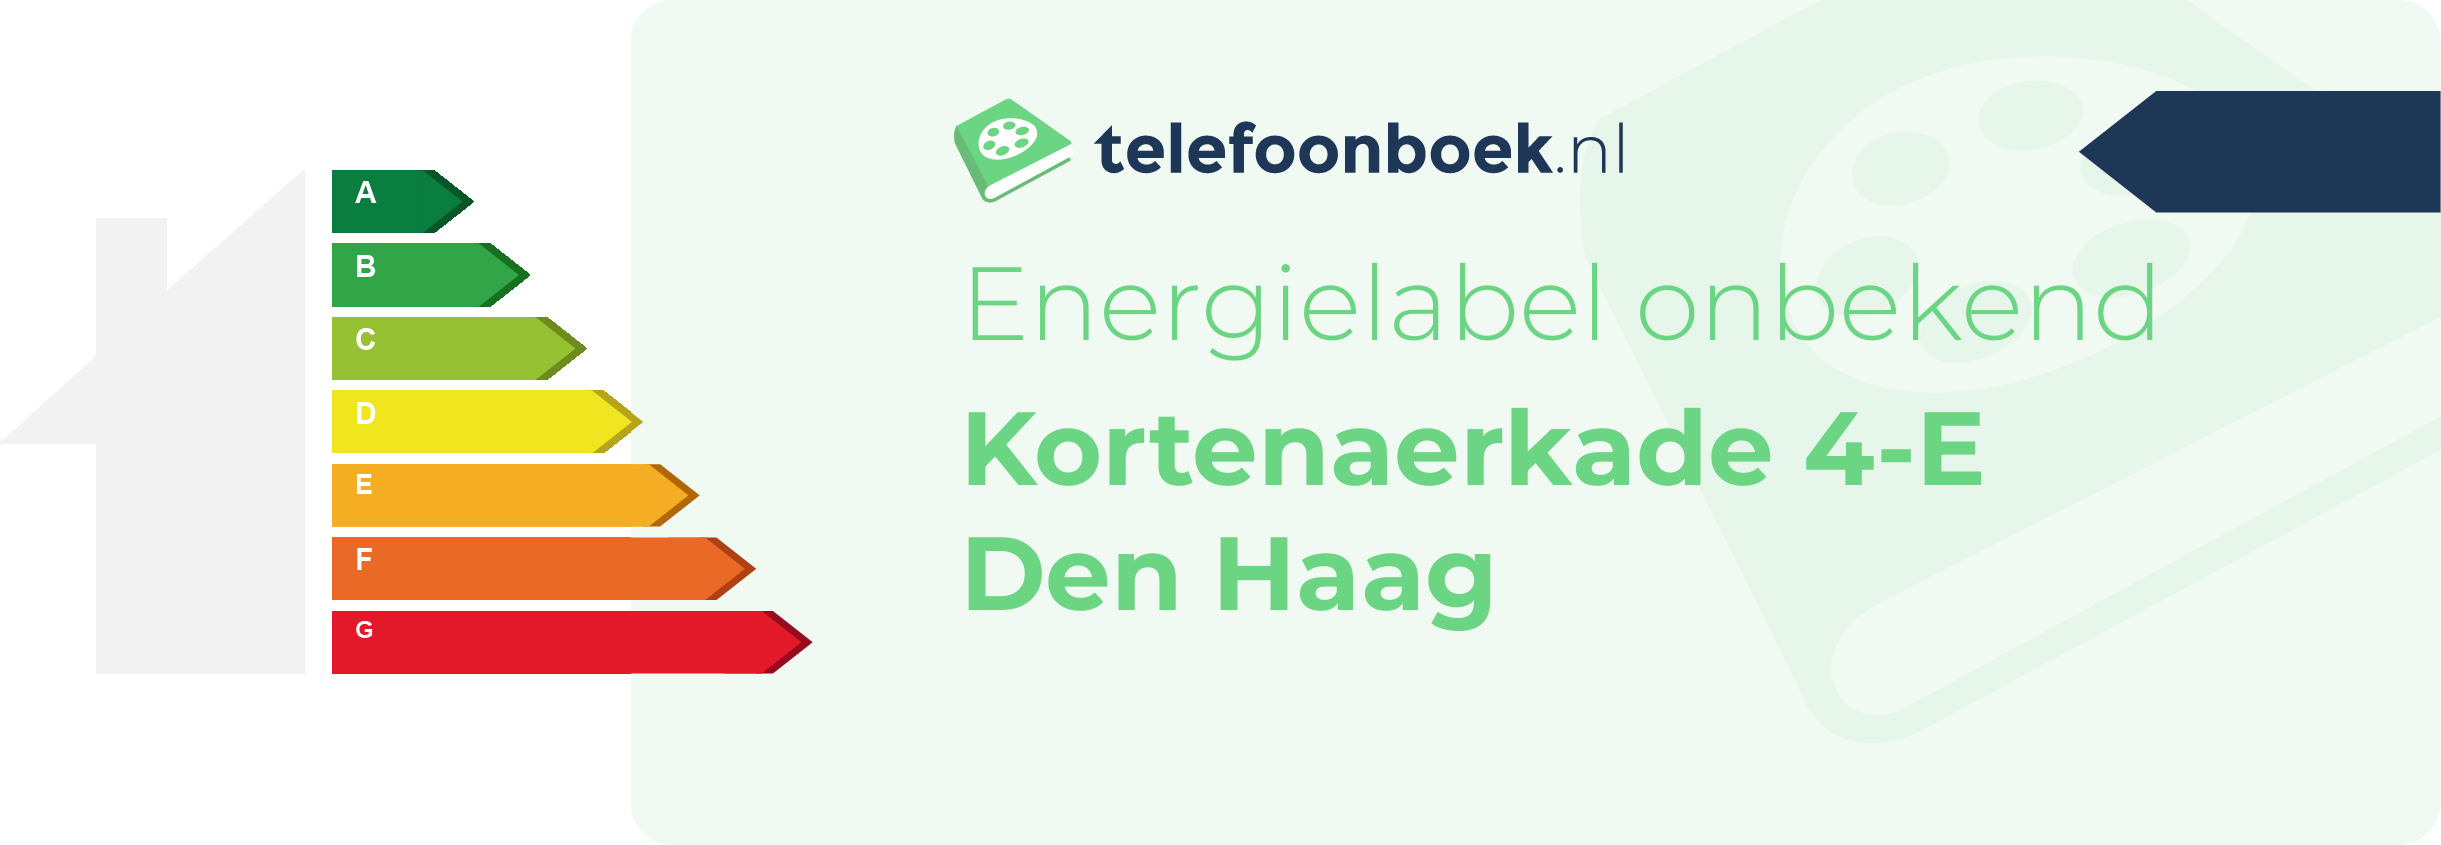 Energielabel Kortenaerkade 4-E Den Haag